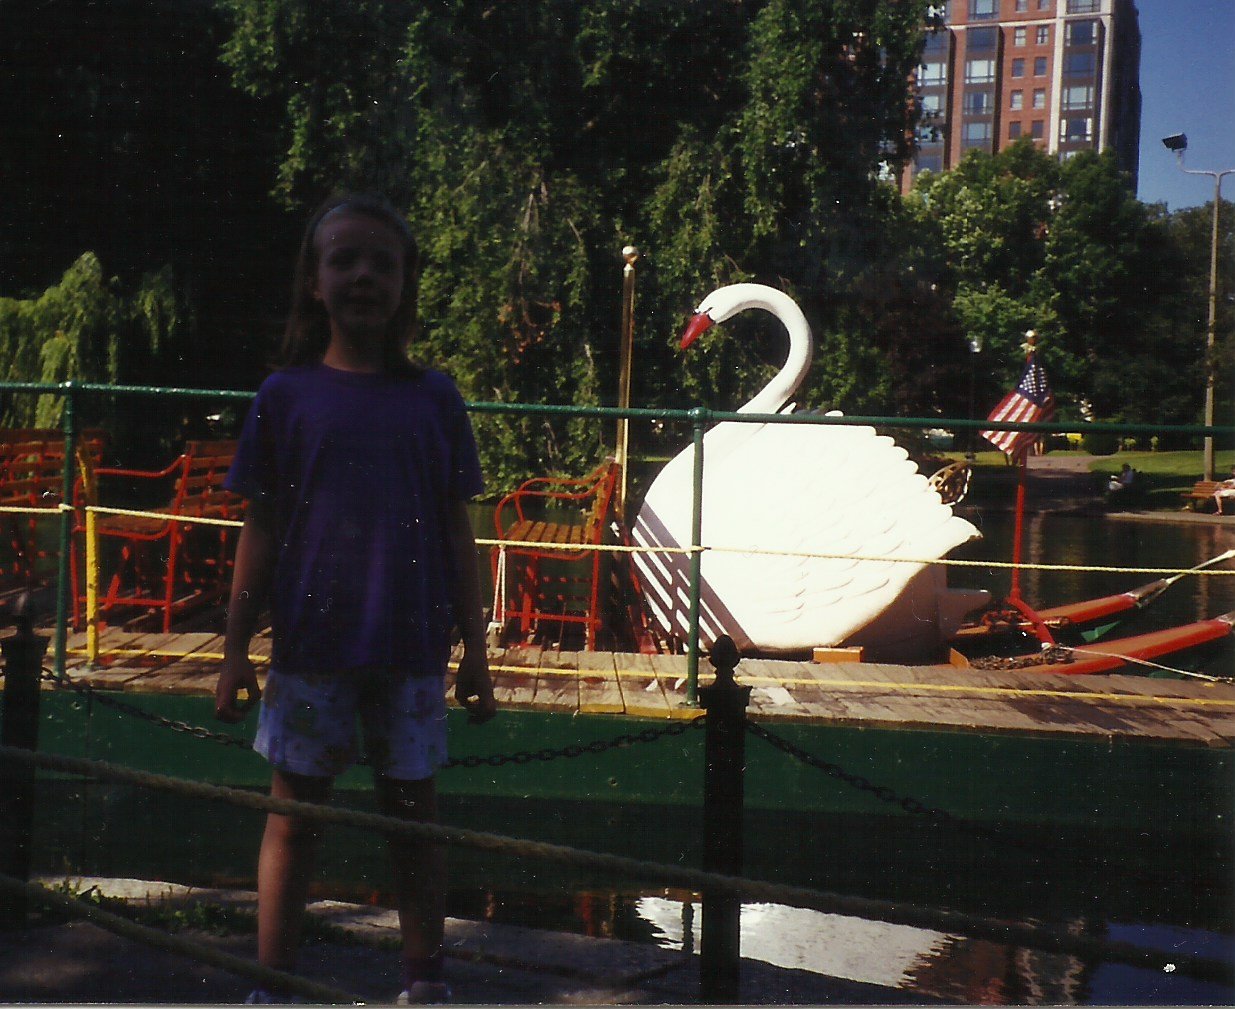 swan-boats-in-boston-commons